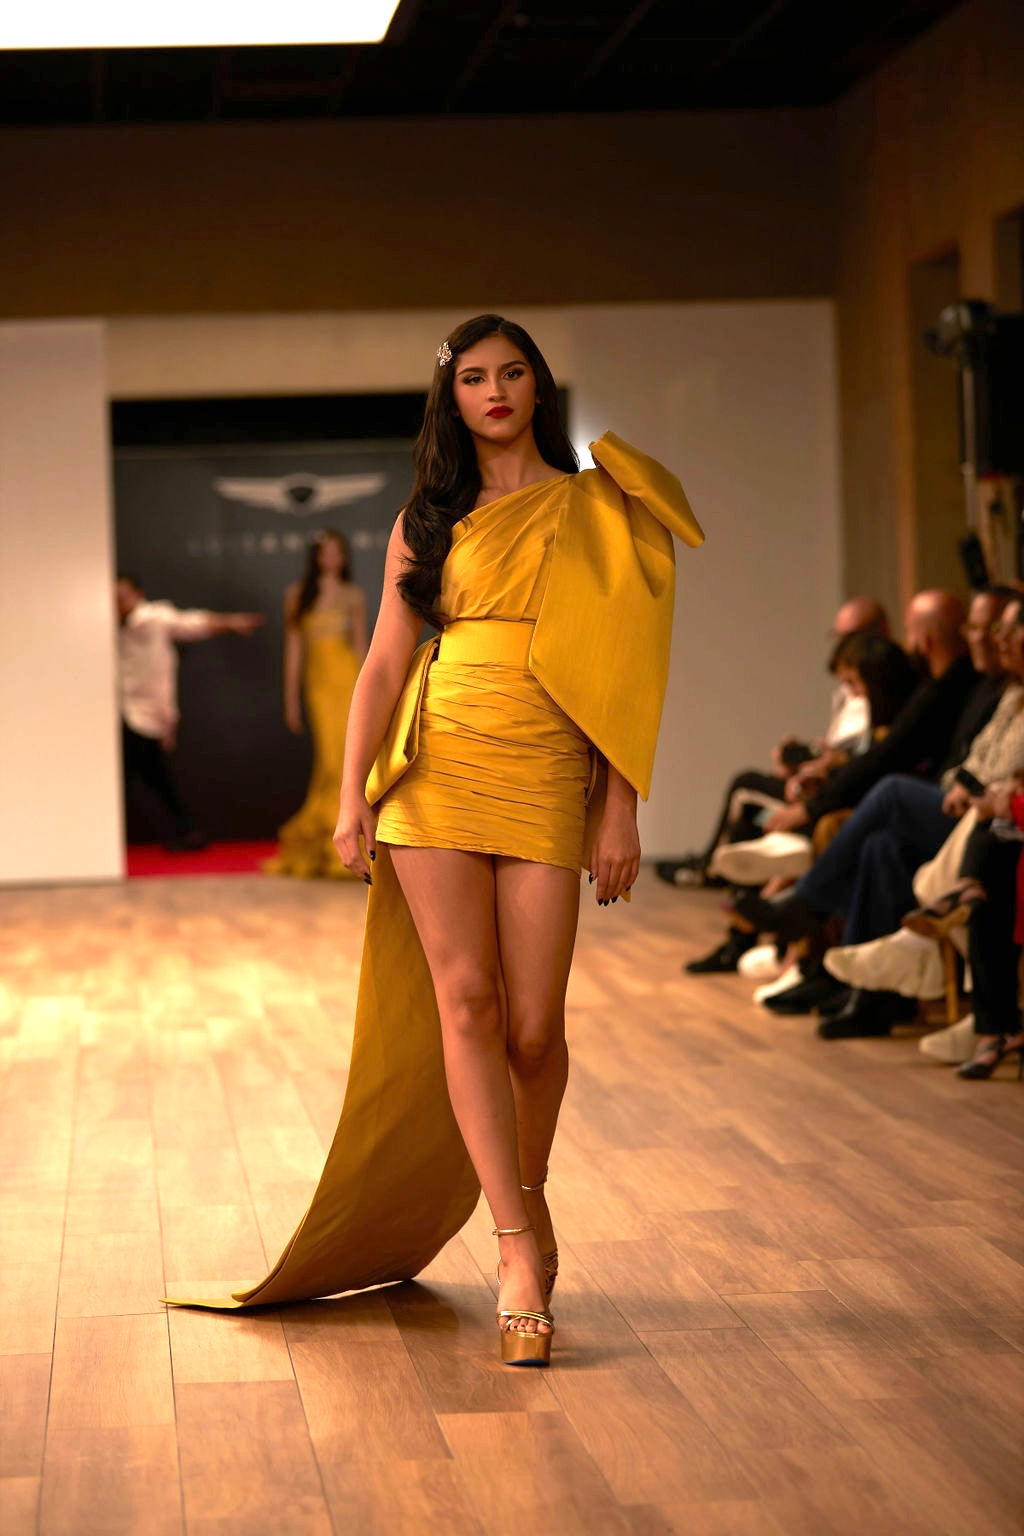 Taffeta yellow dress with bows